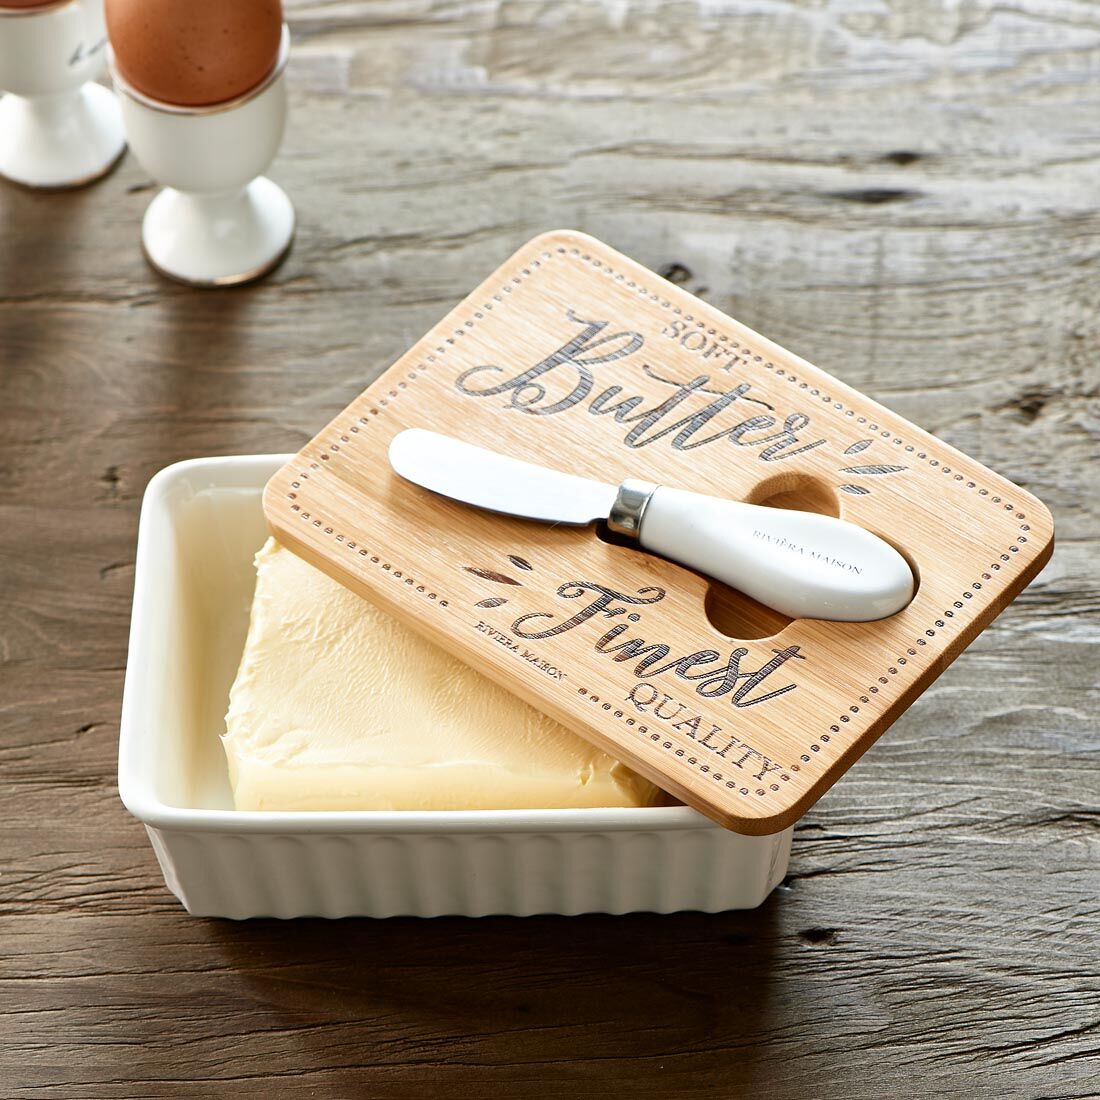 Maselniczka Finest Quality Butter Dish 11cm